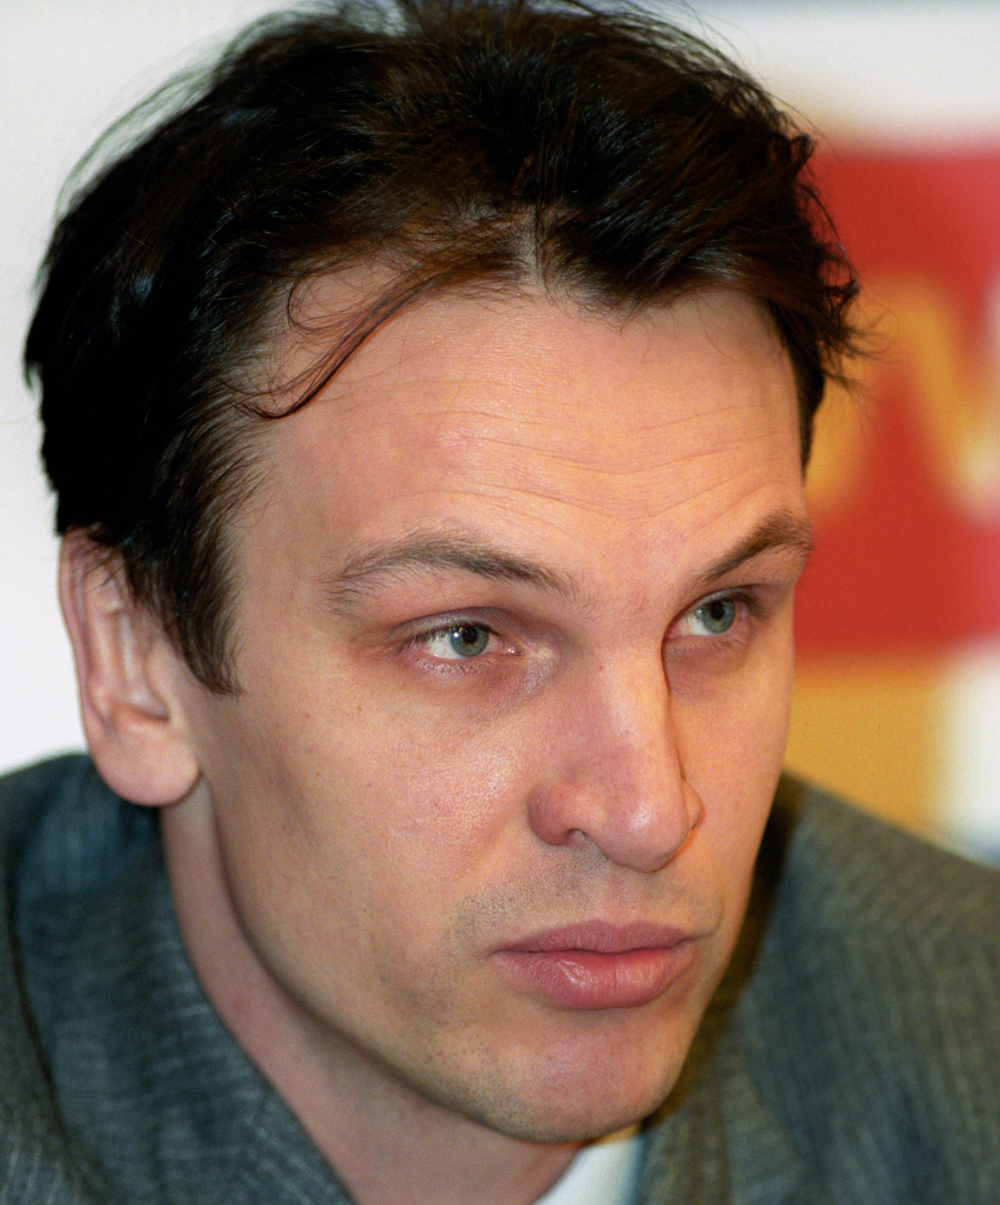 Михаил Хабаров, 2002 г.